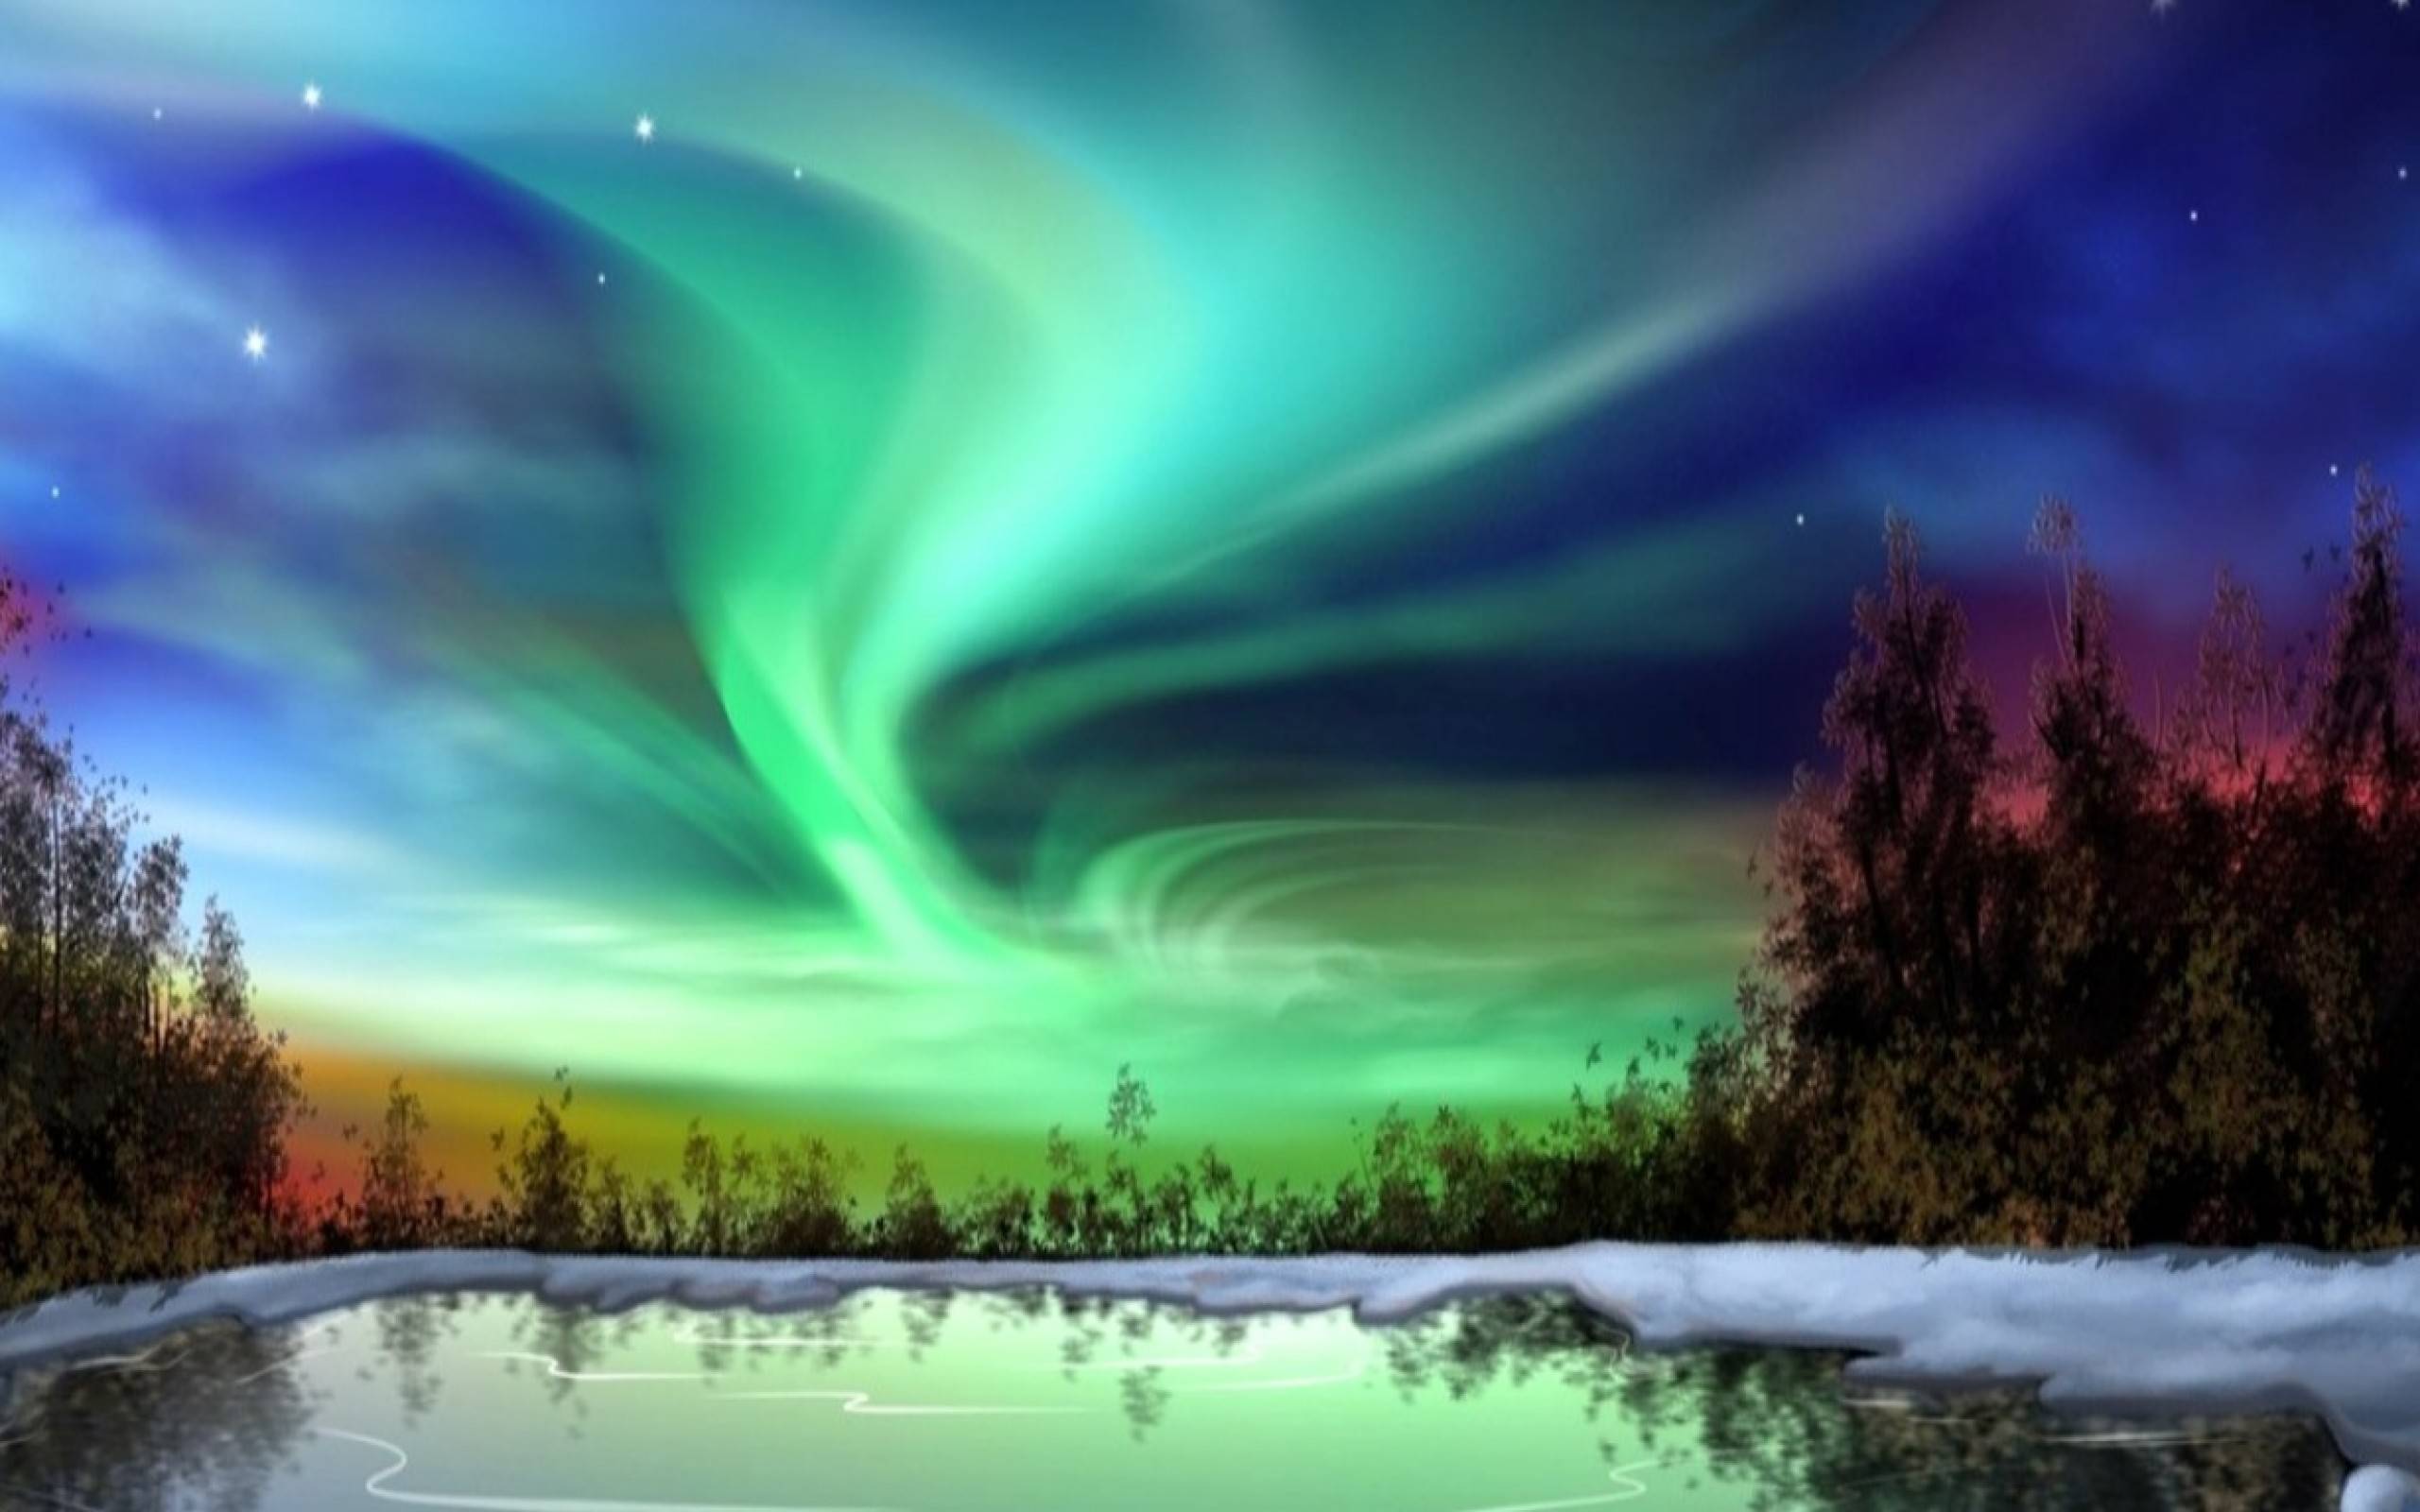 Celestial Aurora Borealis   Northern Lights An Aurora Borealis is